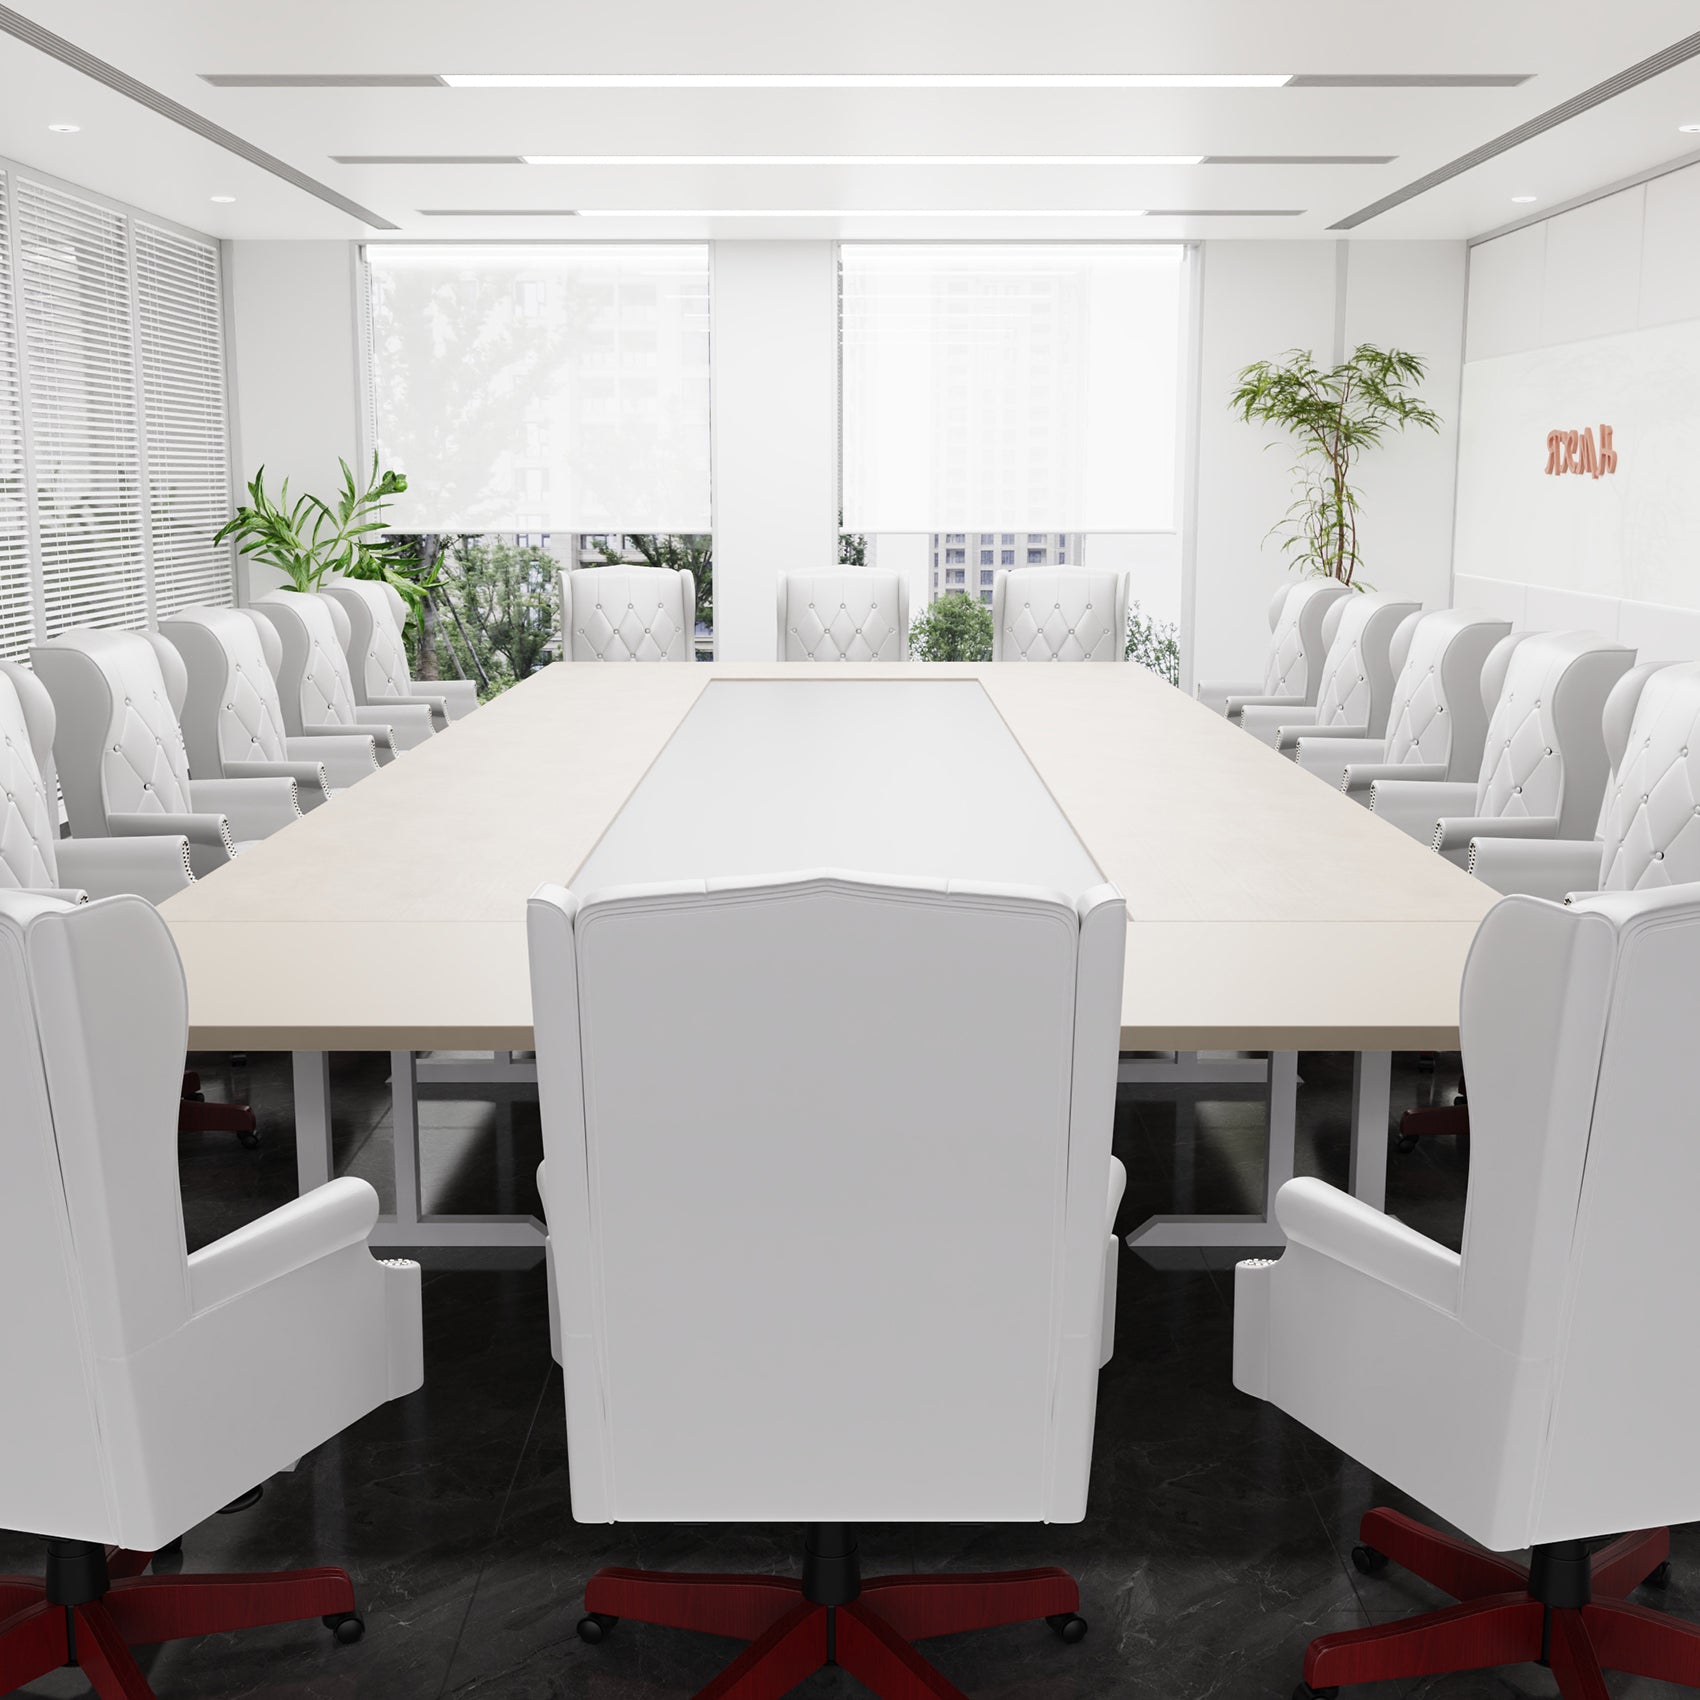 Executive Office Chair, Ergonomic Design High Back Reclining Comfortable Desk Chair - White